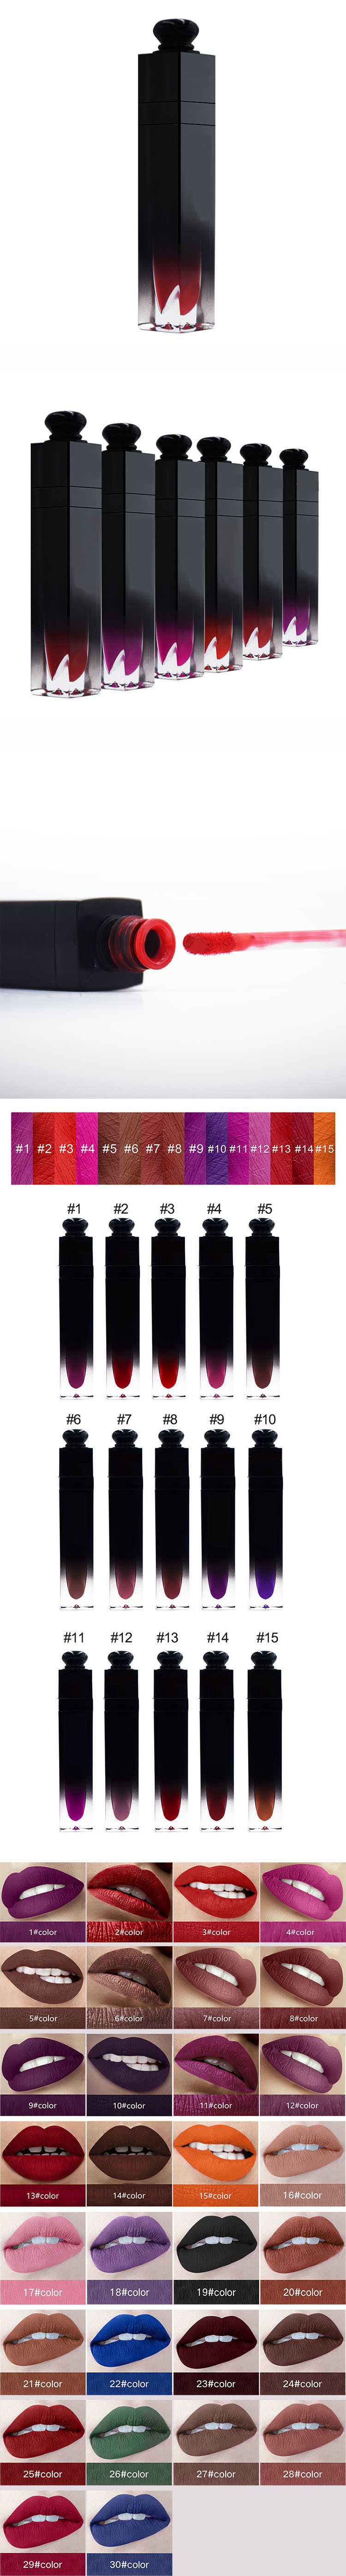 2018 New 30colors Makeup Lip Matte Long Lasting Lip Gloss